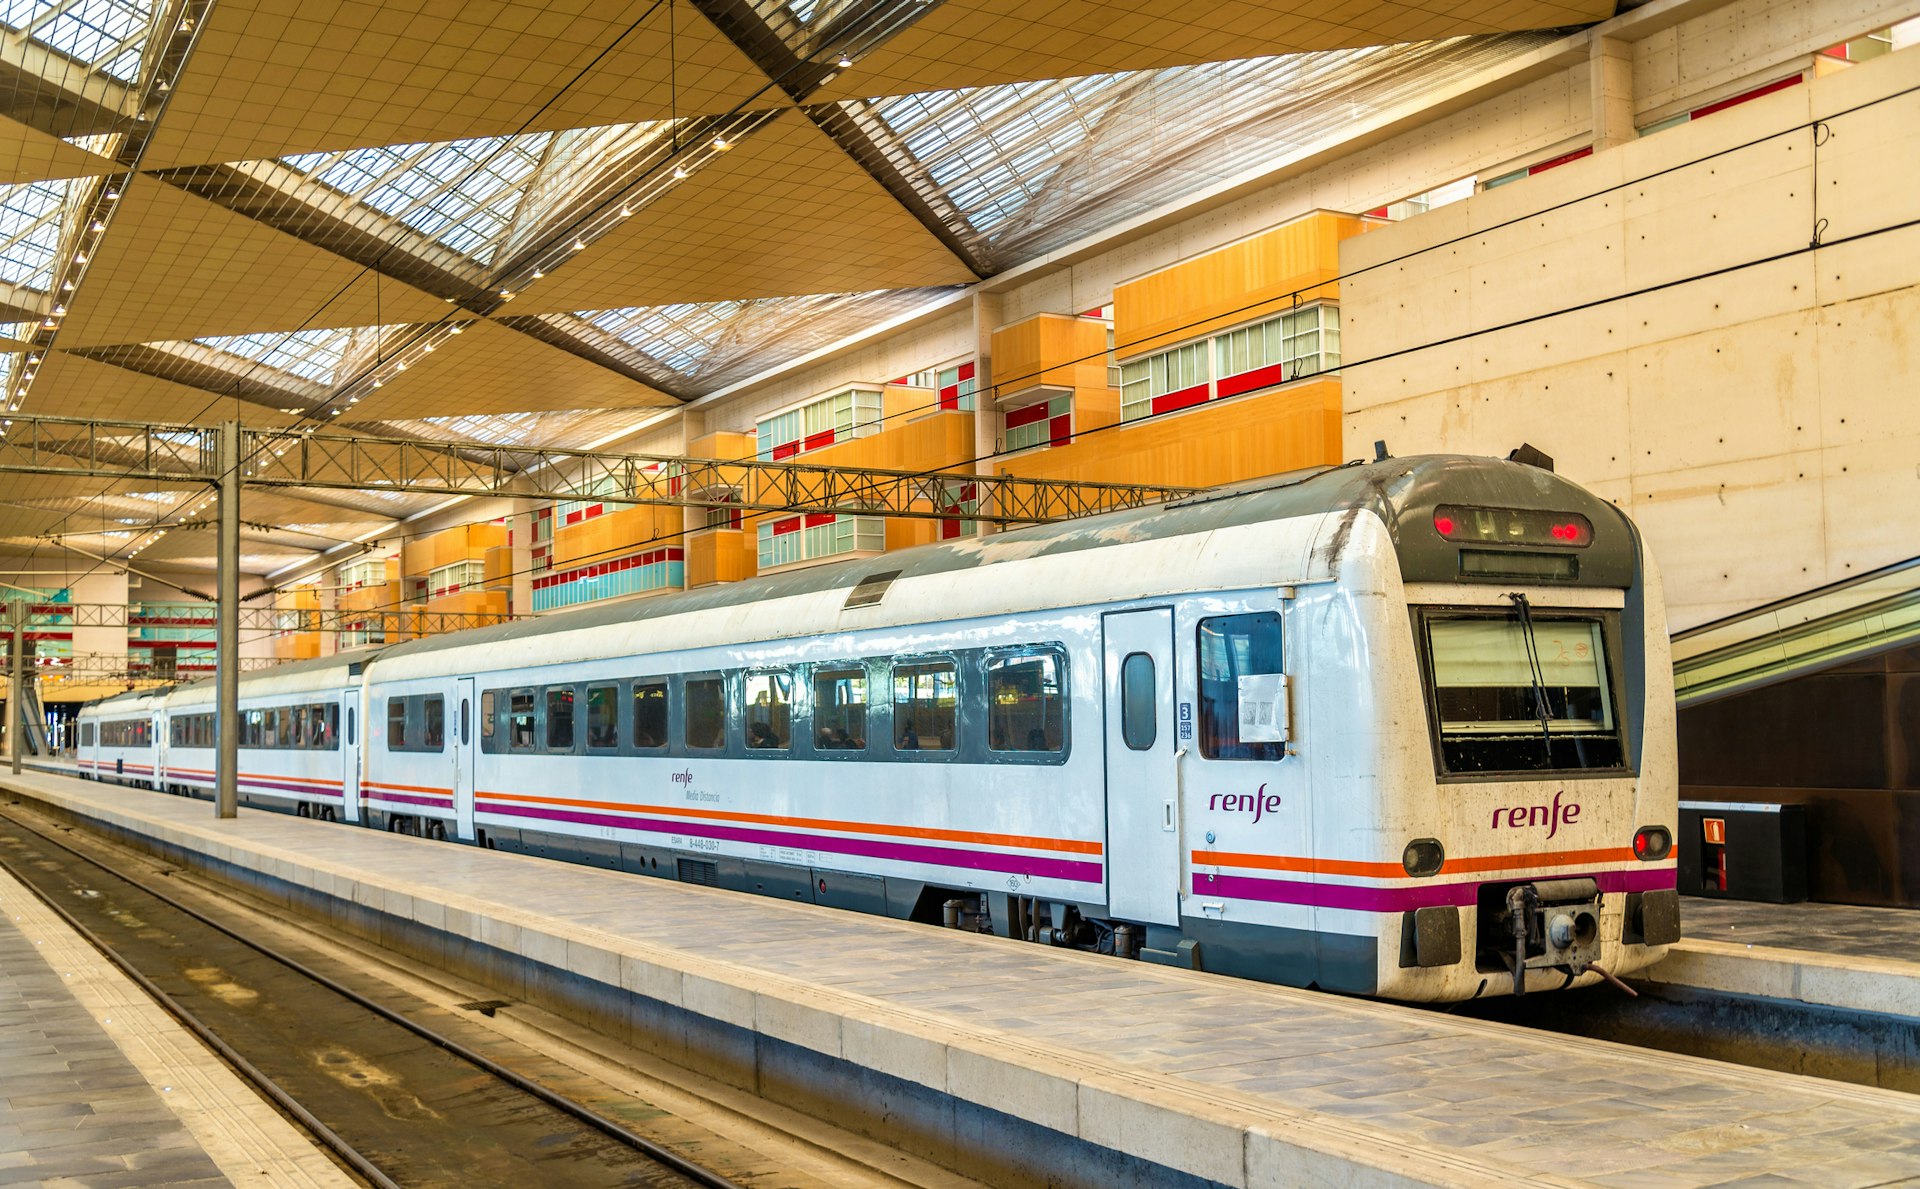 A Renfe Media Distancia train at Zaragoza-Delicias station in Zaragoza, Spain